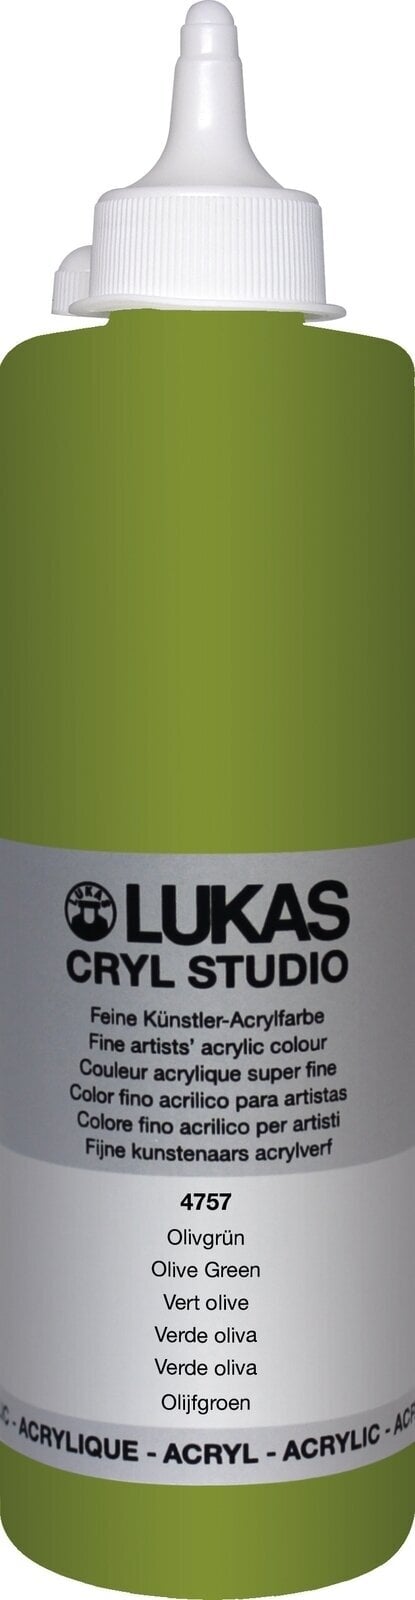 Akrylmaling Lukas Cryl Studio Akrylmaling 500 ml Olive Green